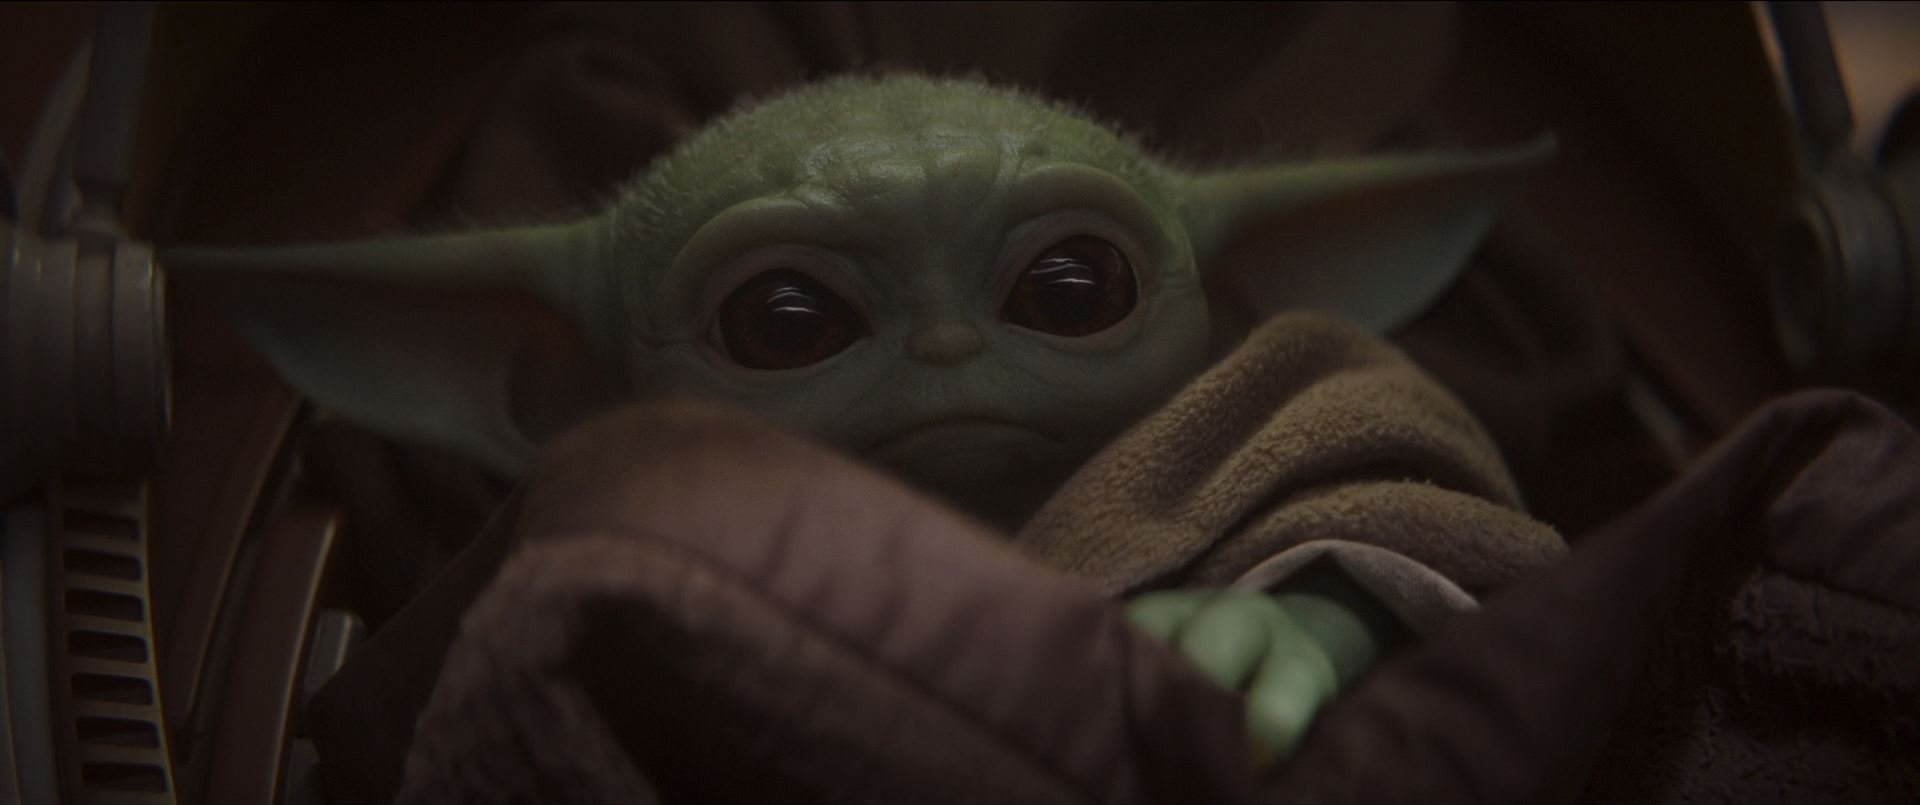 The Mandalorian with baby Yoda